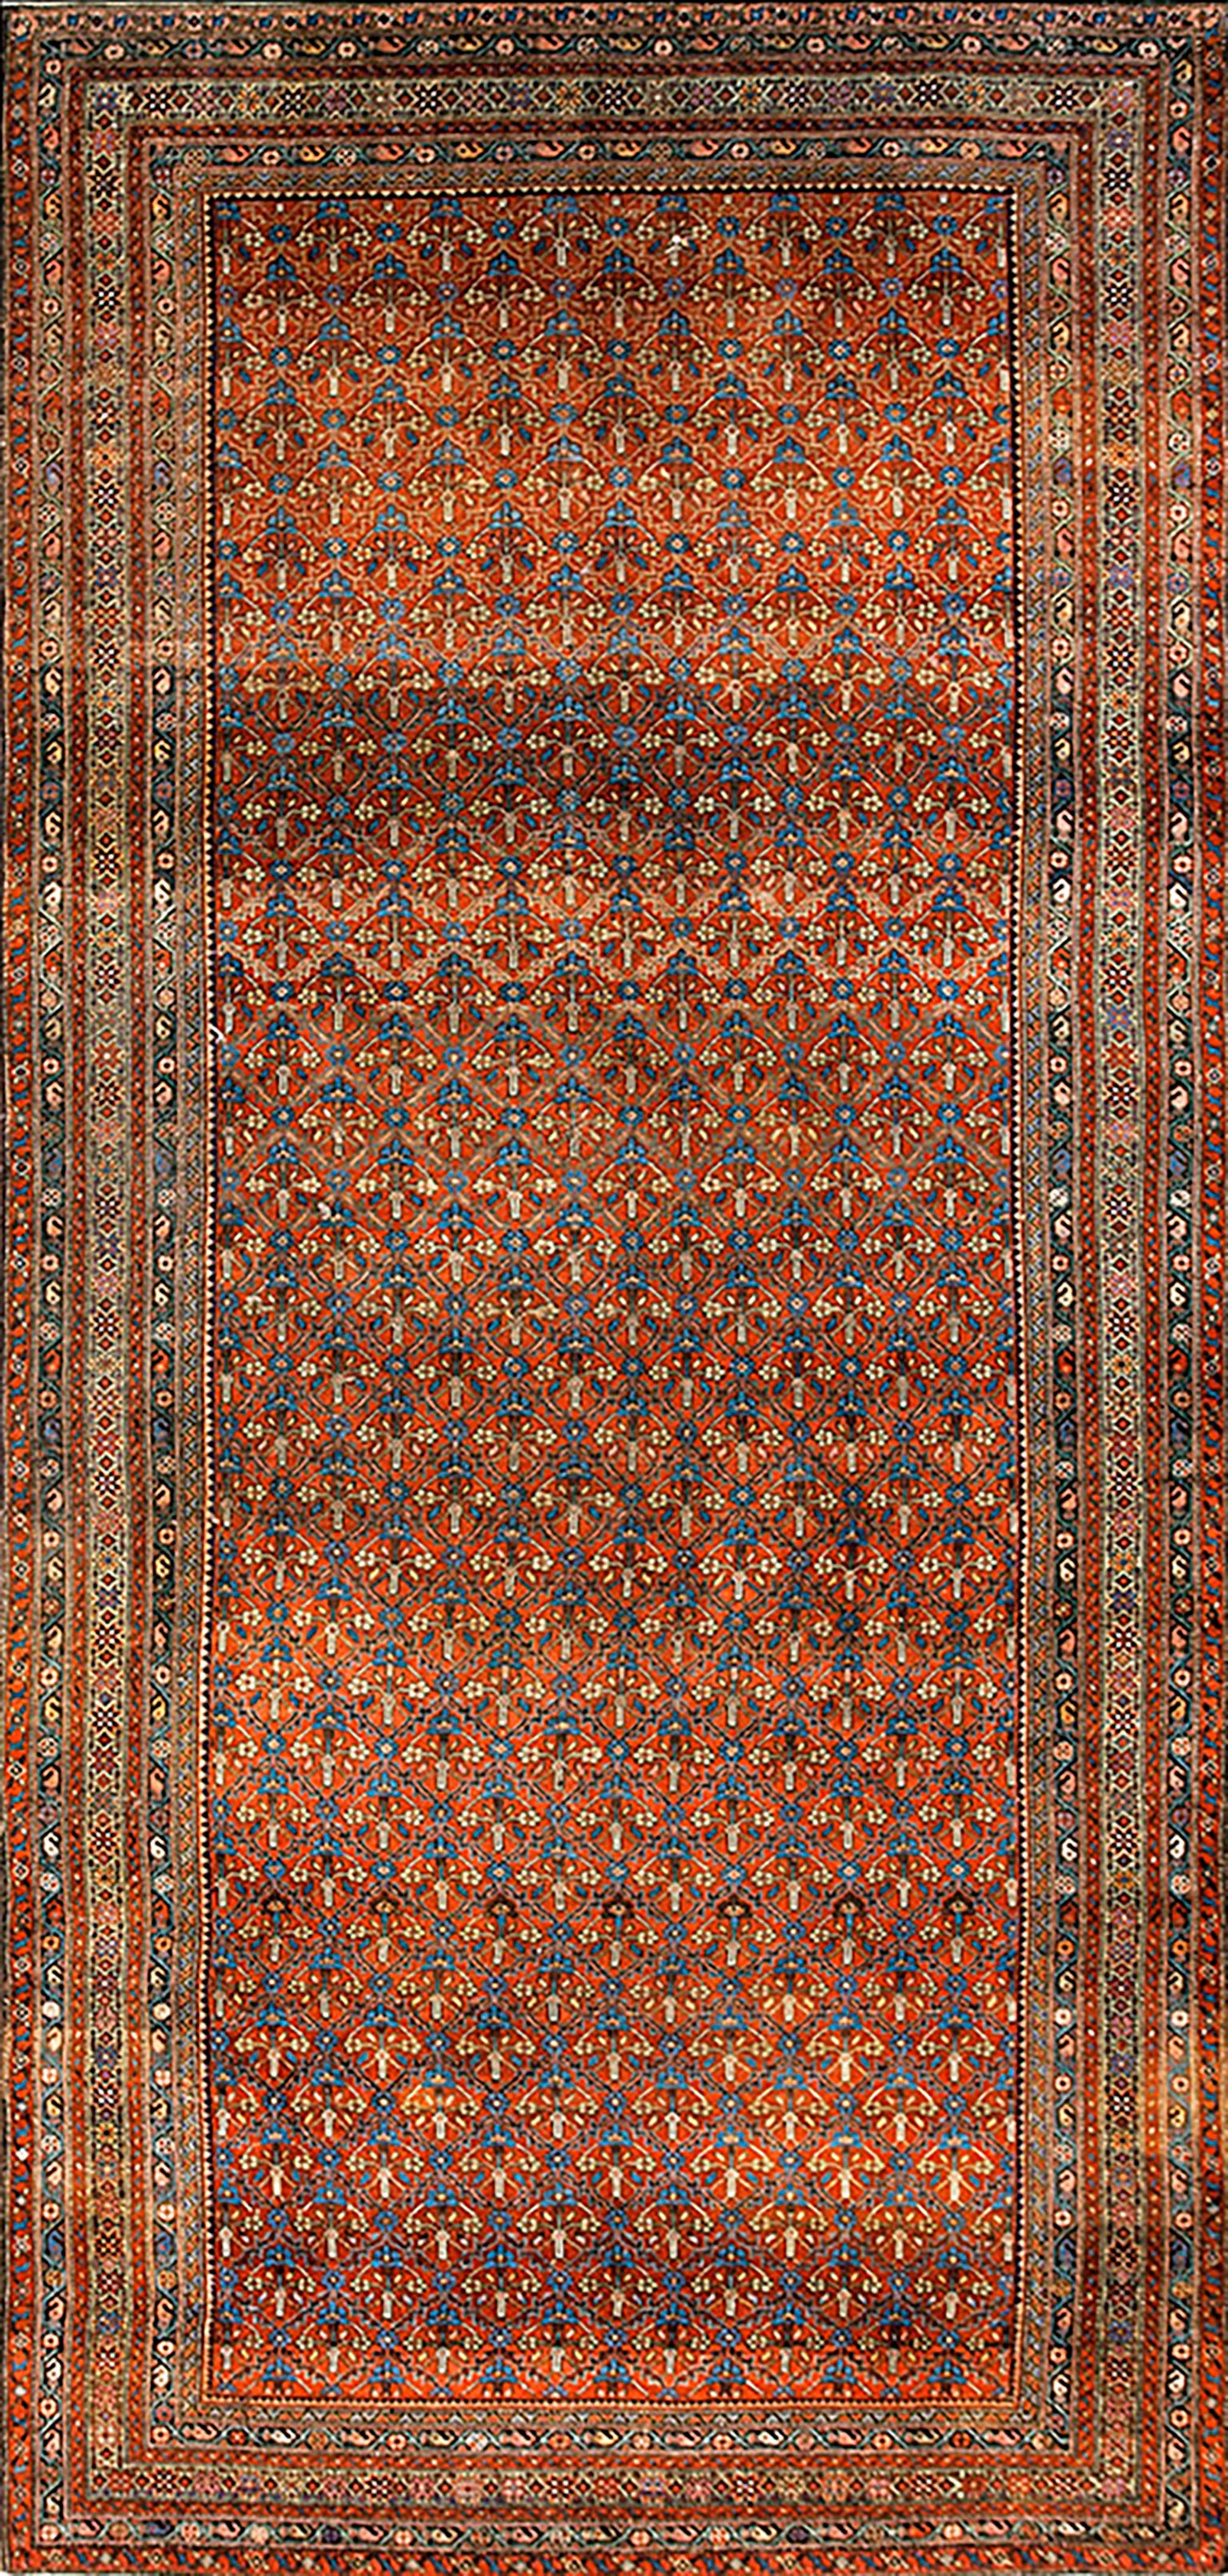 Early 20th Century N.W. Persian Gallery Carpet ( 6' x 13' - 183 x 396 )